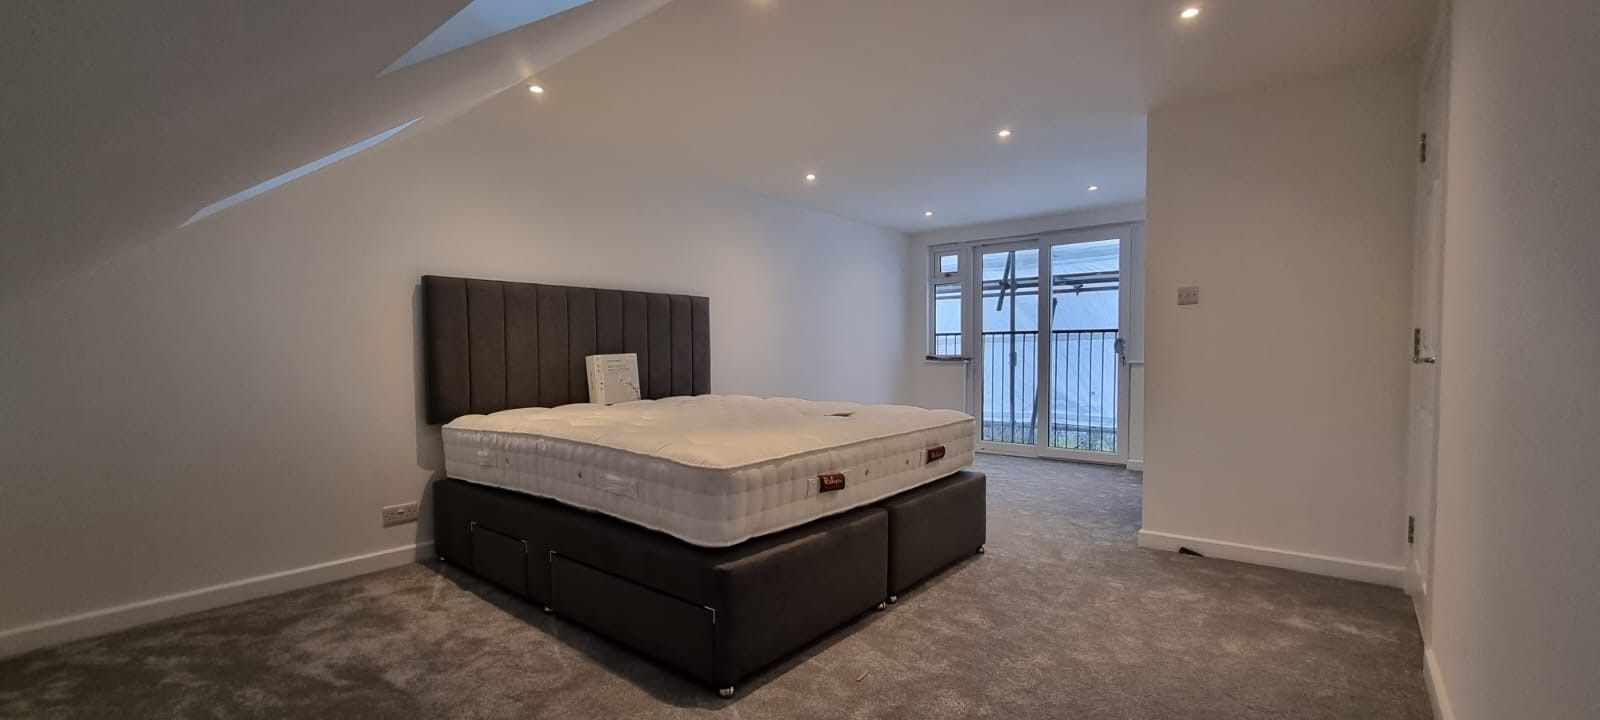 Bedroom Loft Conversion | Room Loft Conversion Essex